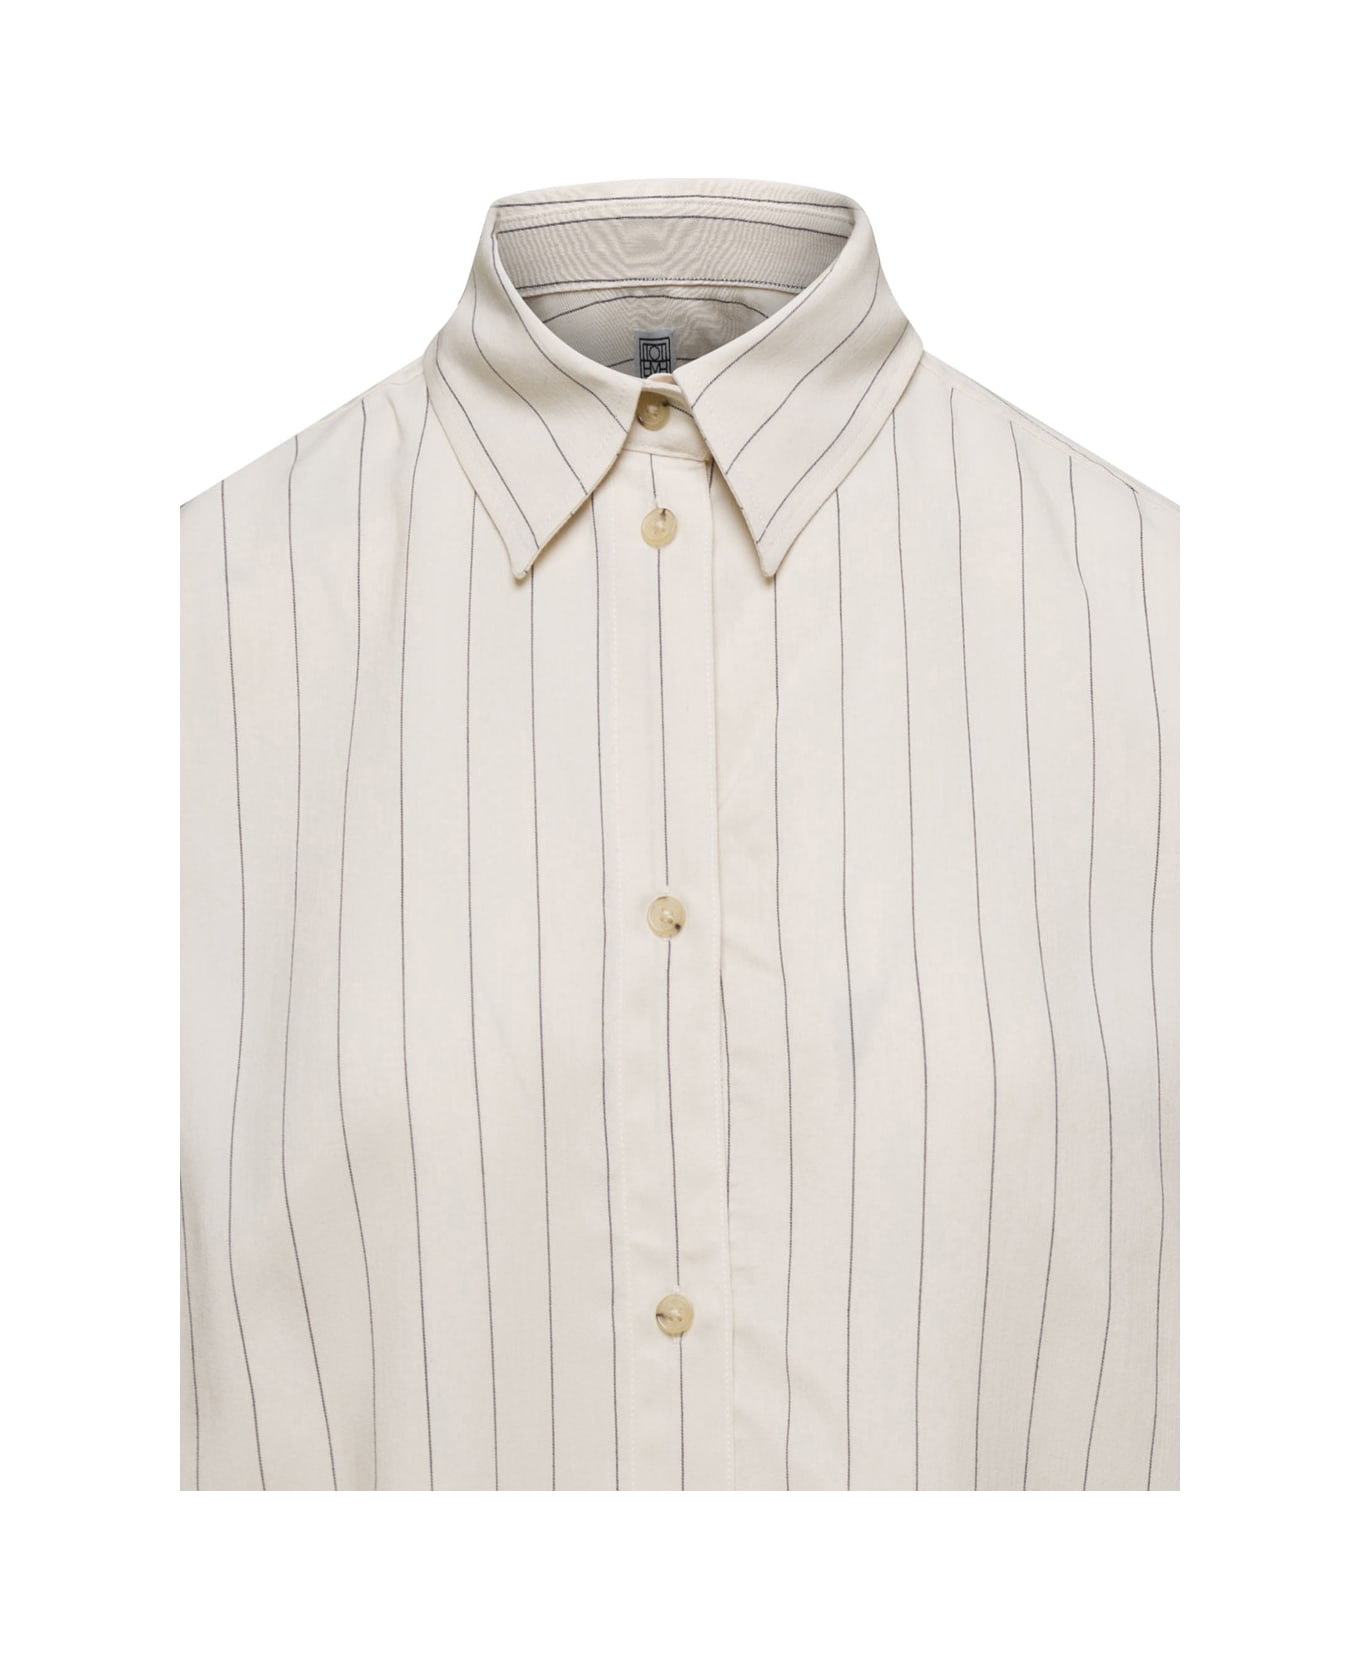 Totême Relaxed Pinstriped Shirt - White/black シャツ